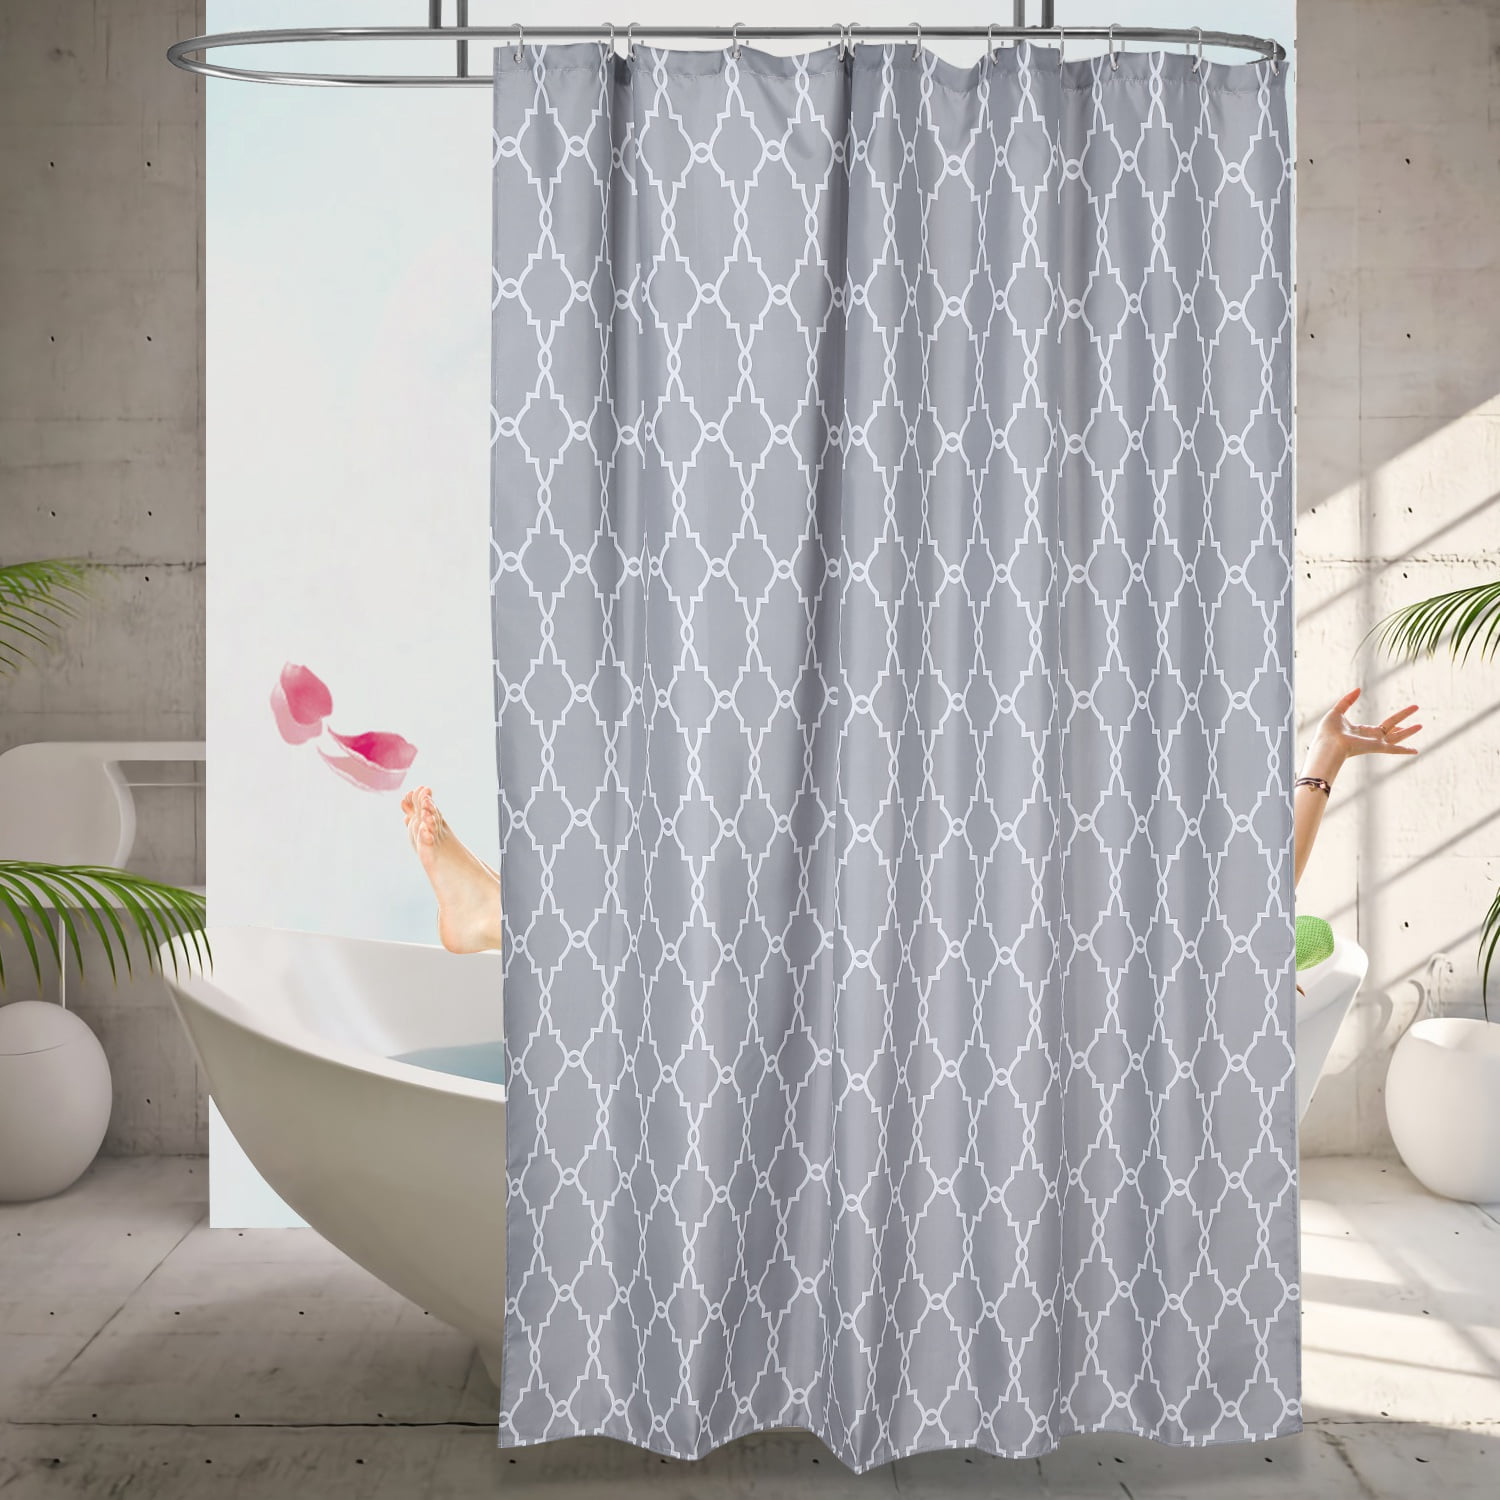 Grey Fish Shell Seafood Shower Curtain Liner Waterproof Fabric Bathroom Hooks 